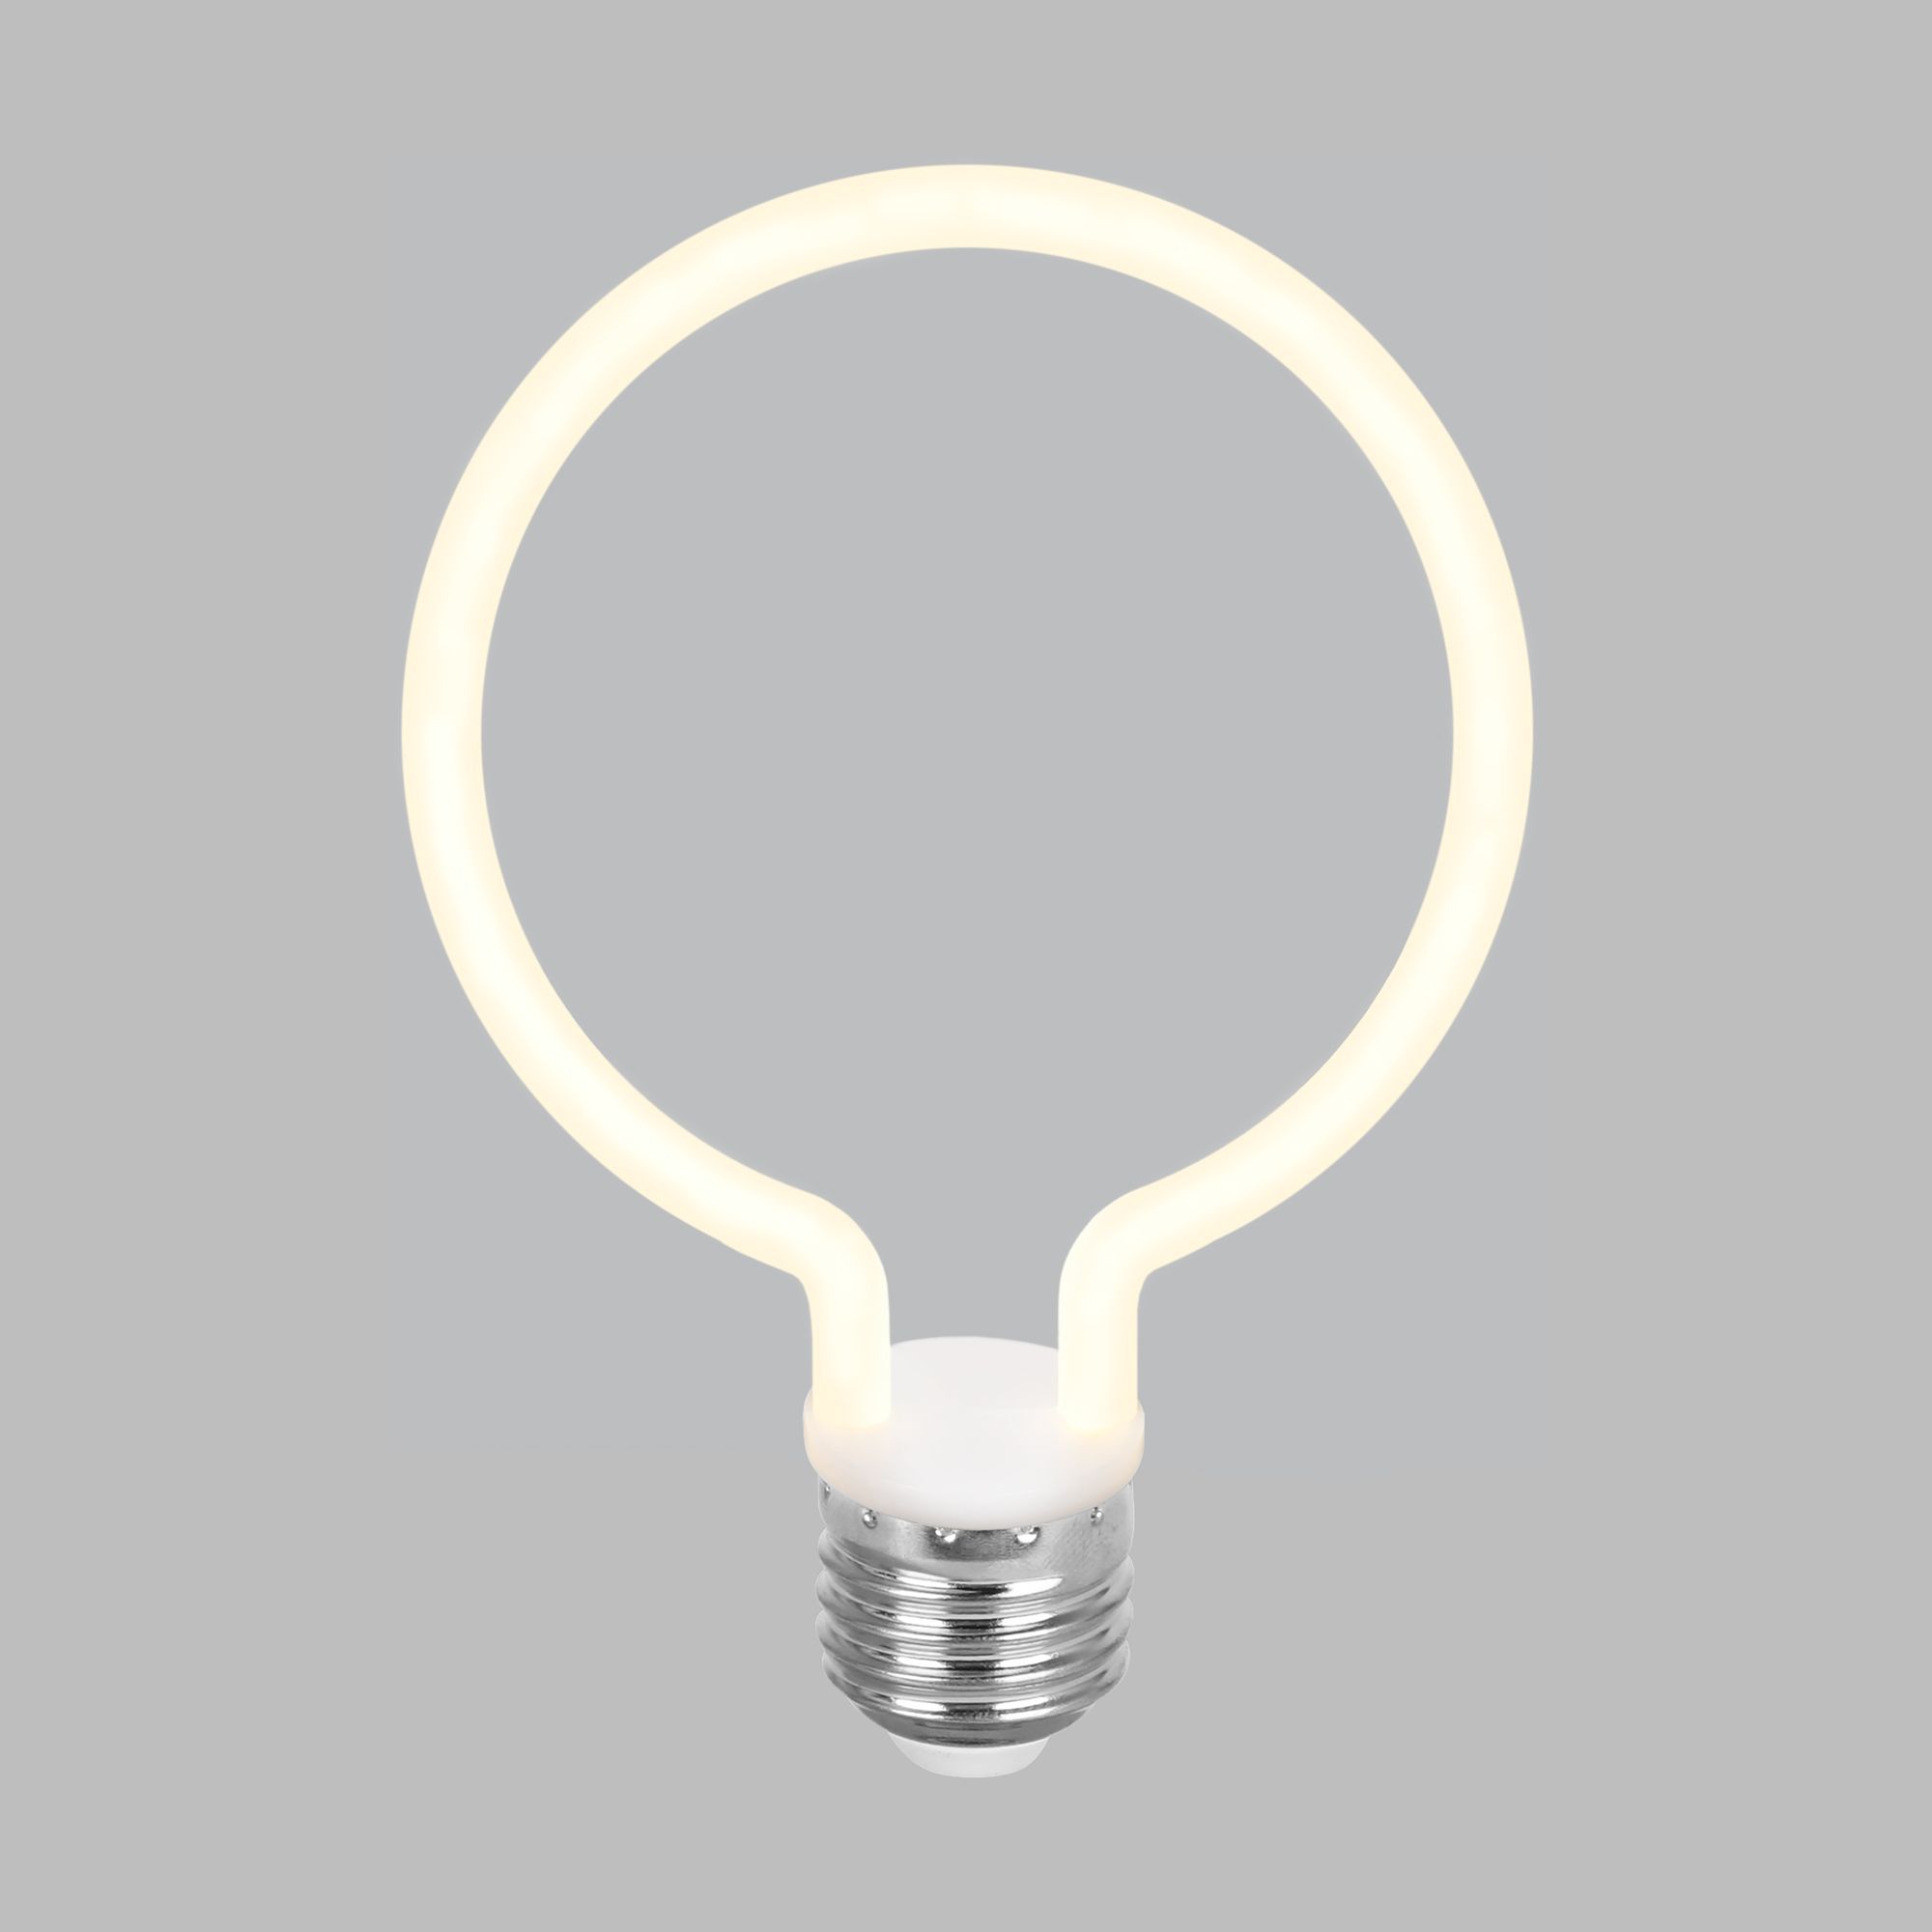 Филаментная светодиодная лампа Decor filament 4W 2700K E27 BL156